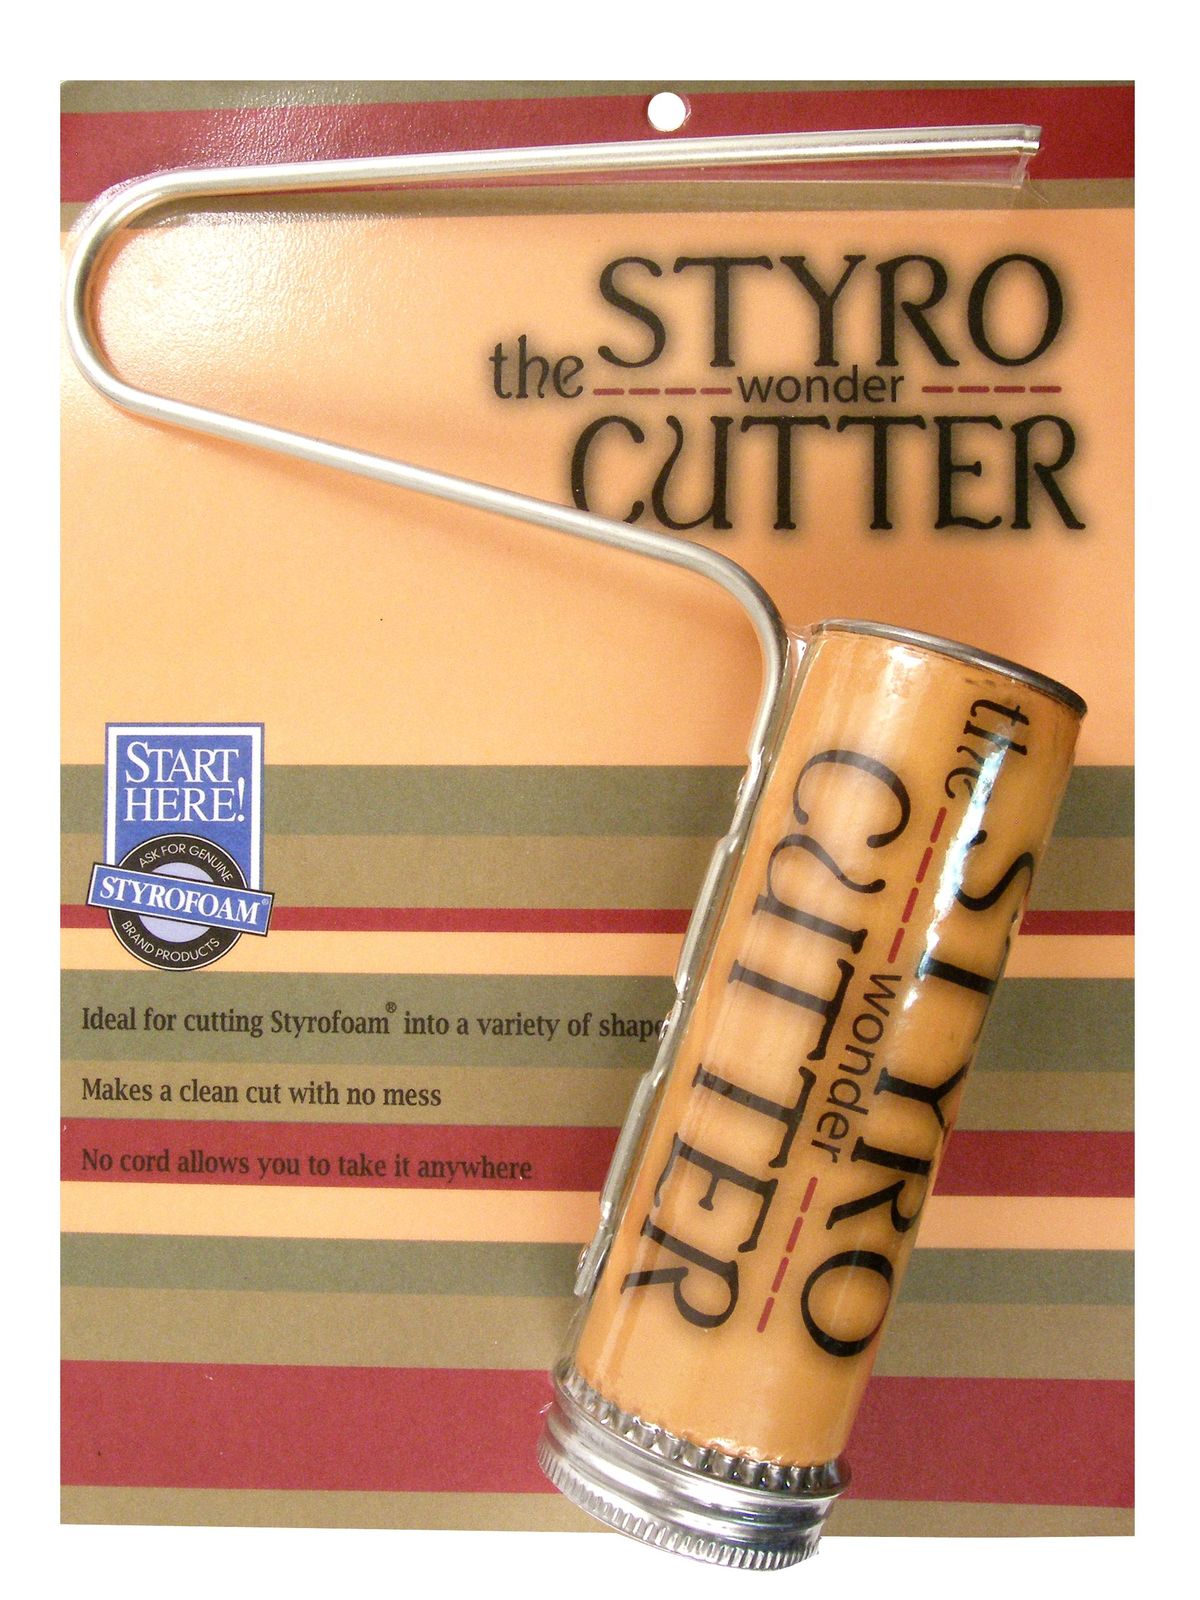 The Styro Wonder Cutter Cutter